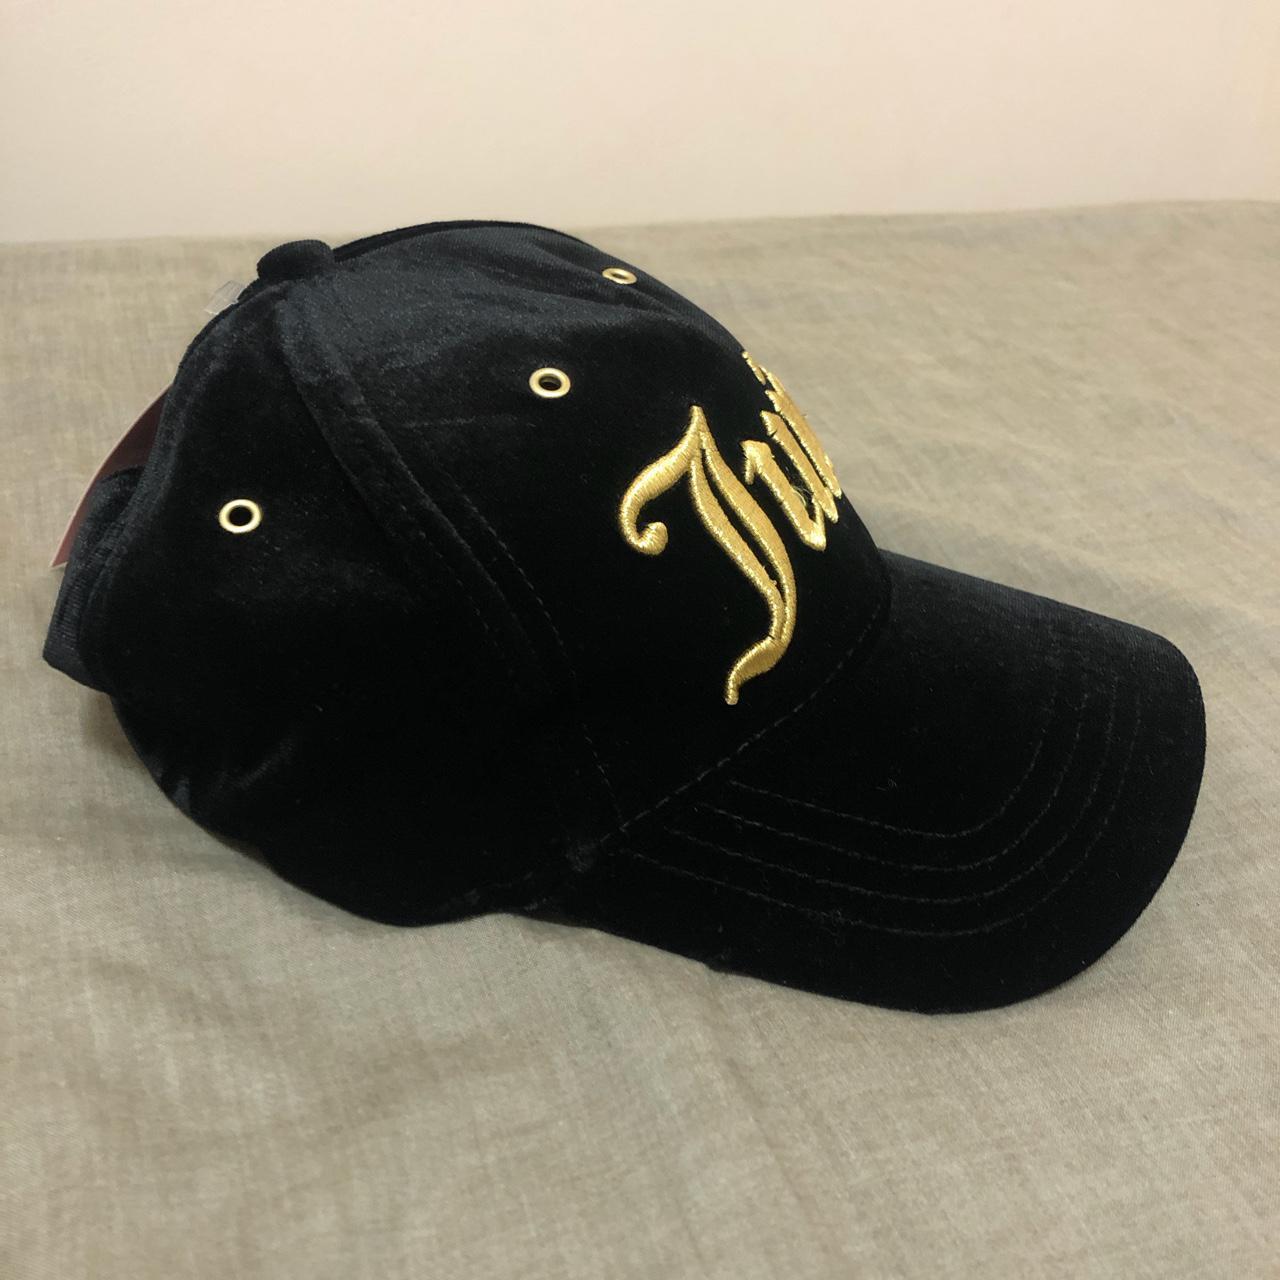 Product Image 2 - Black velvet juicy hat with